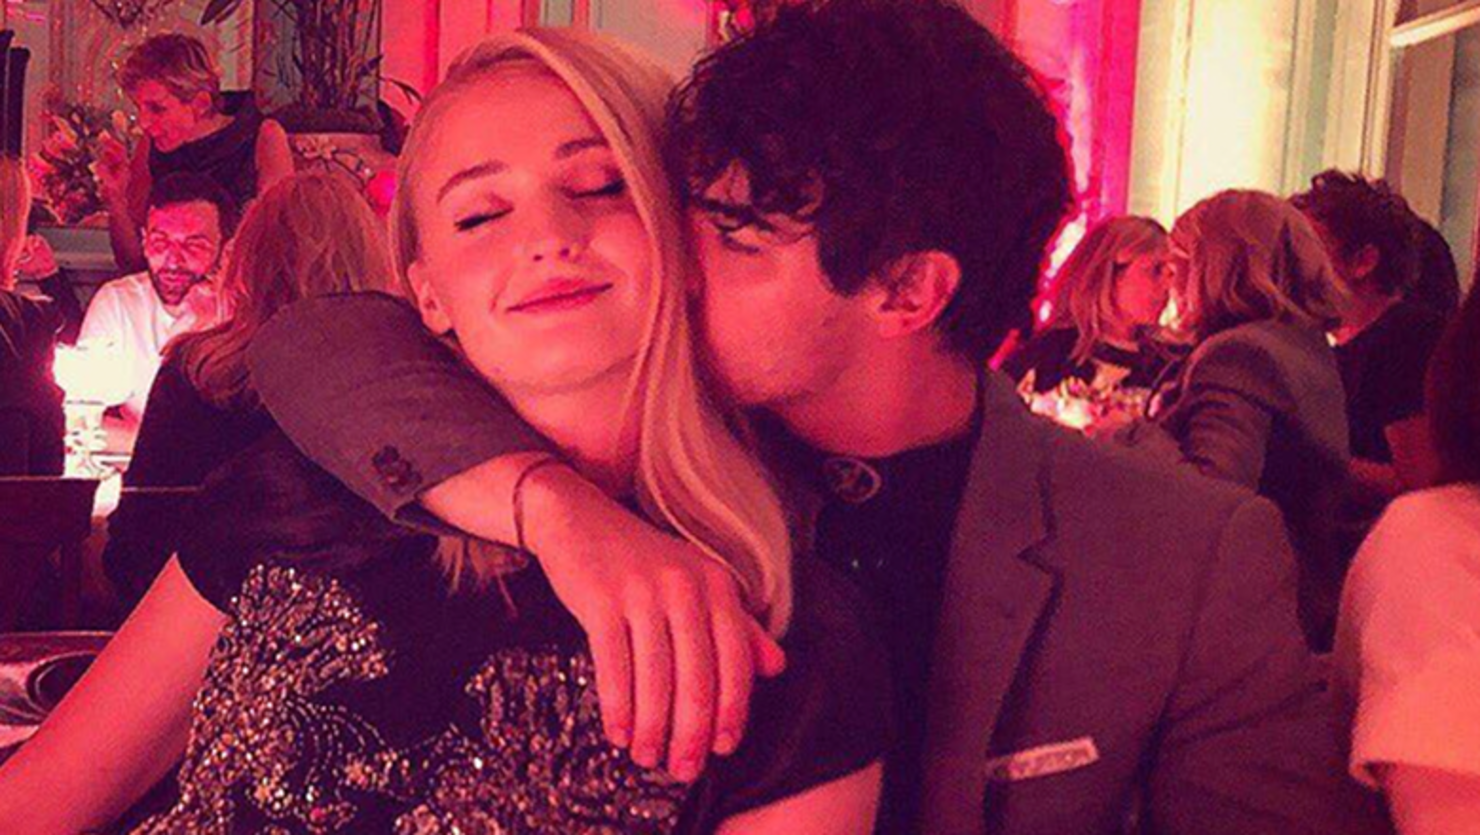 Joe Jonas takes daughters out on Halloween as Sophie Turner kisses  aristocrat